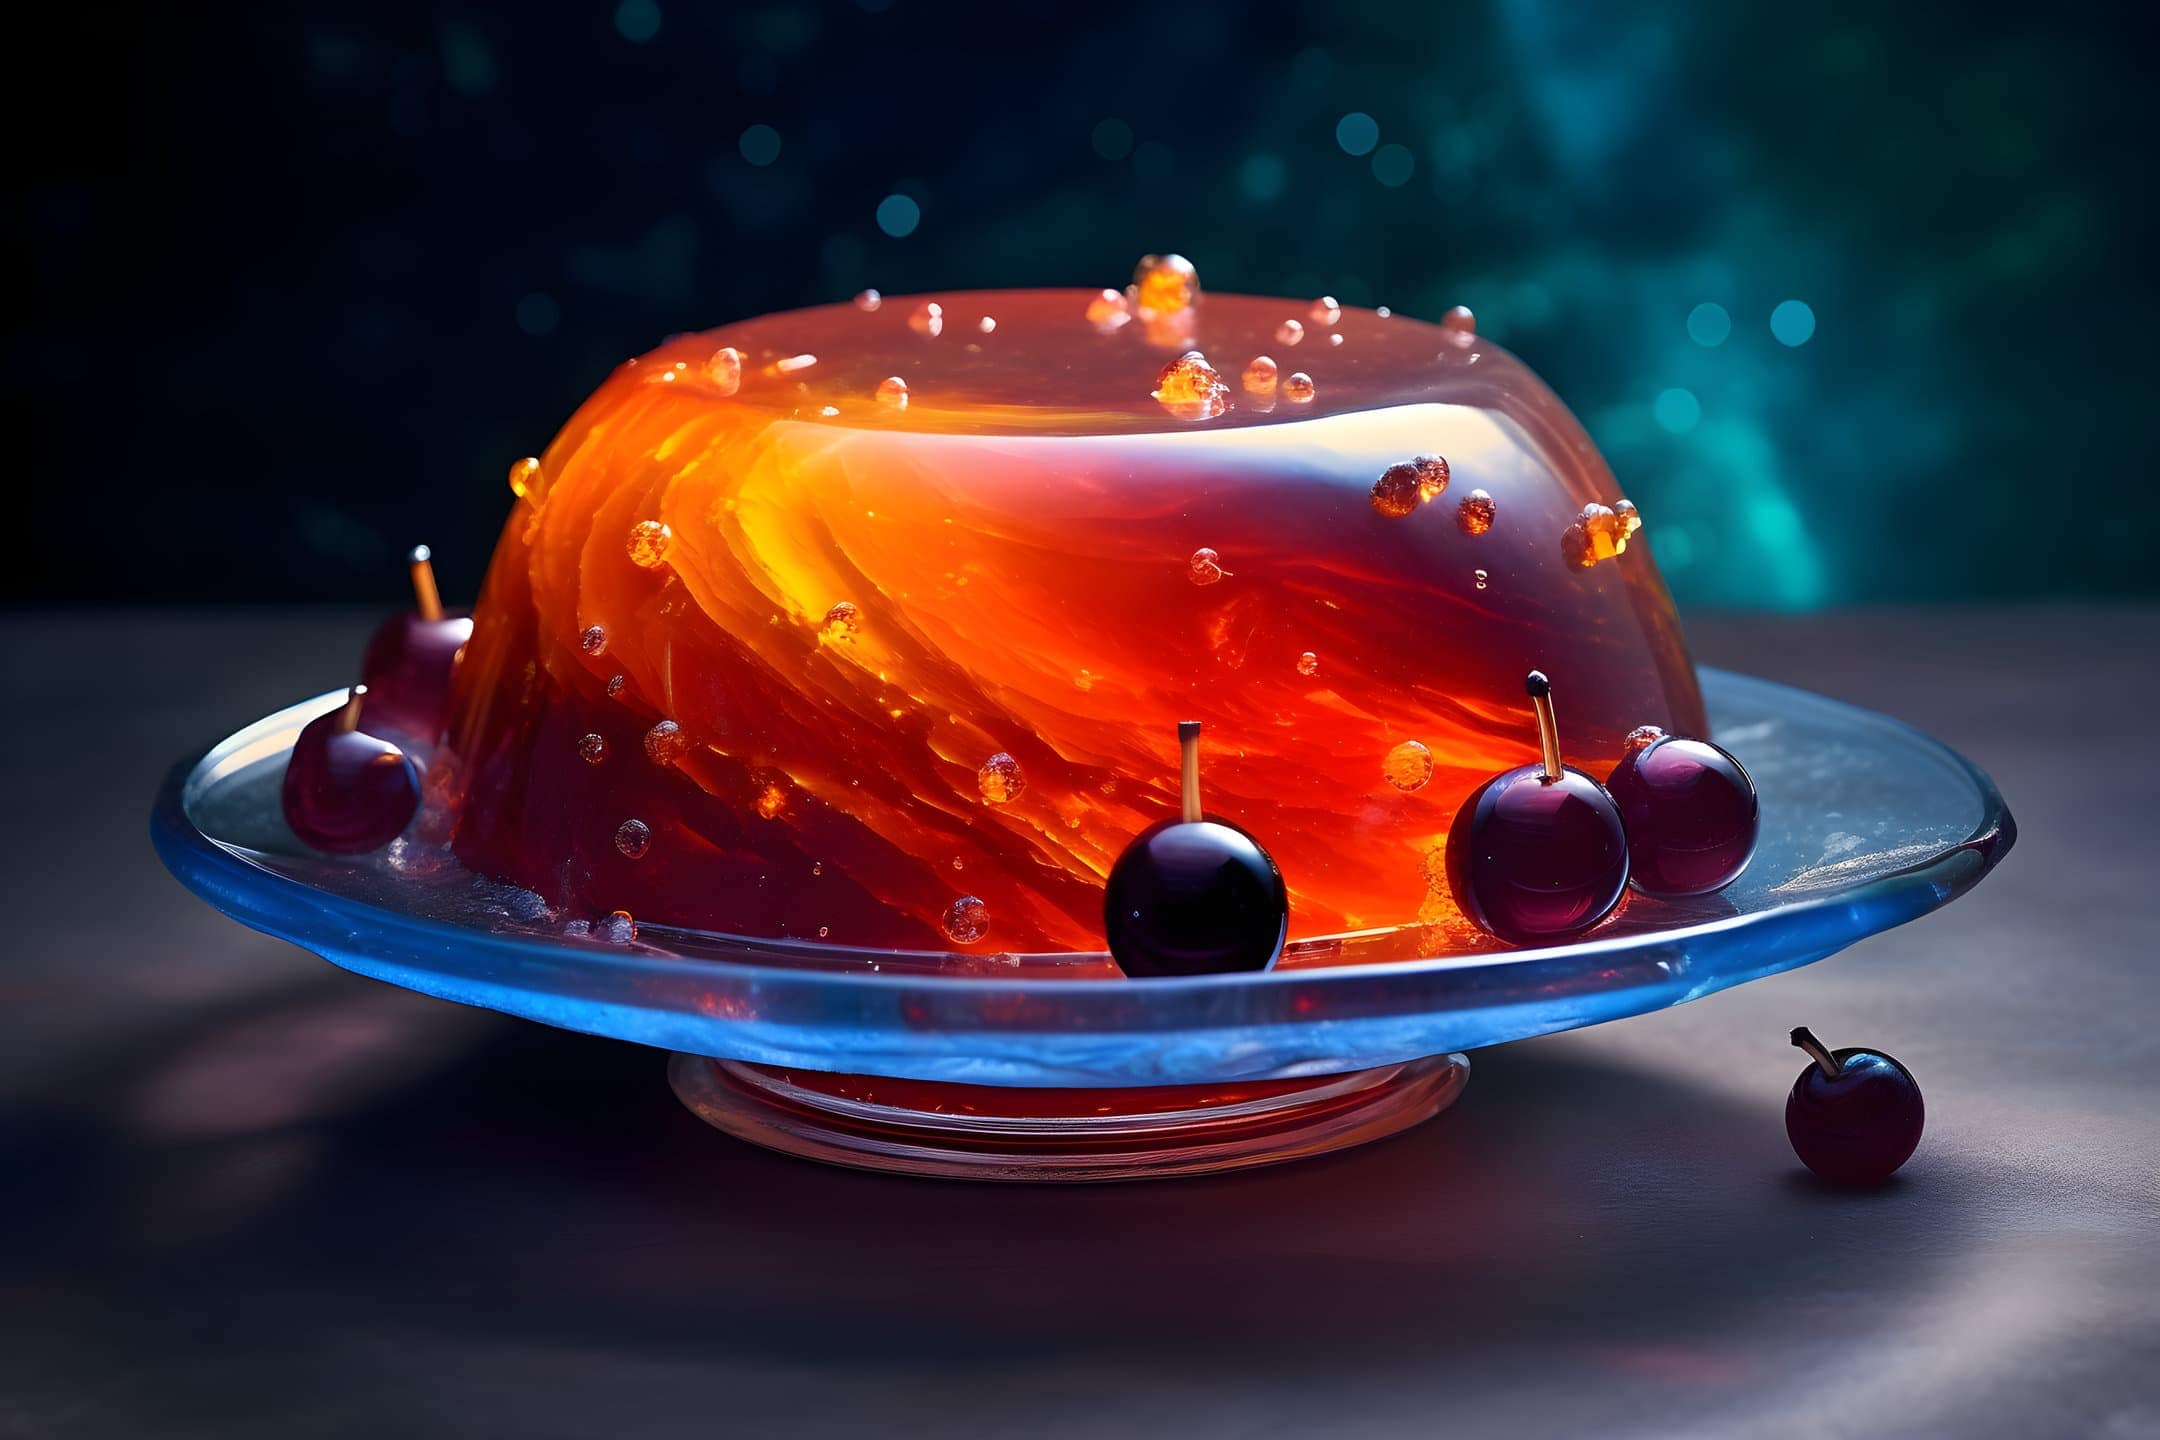 Galaxy clear jelly cake